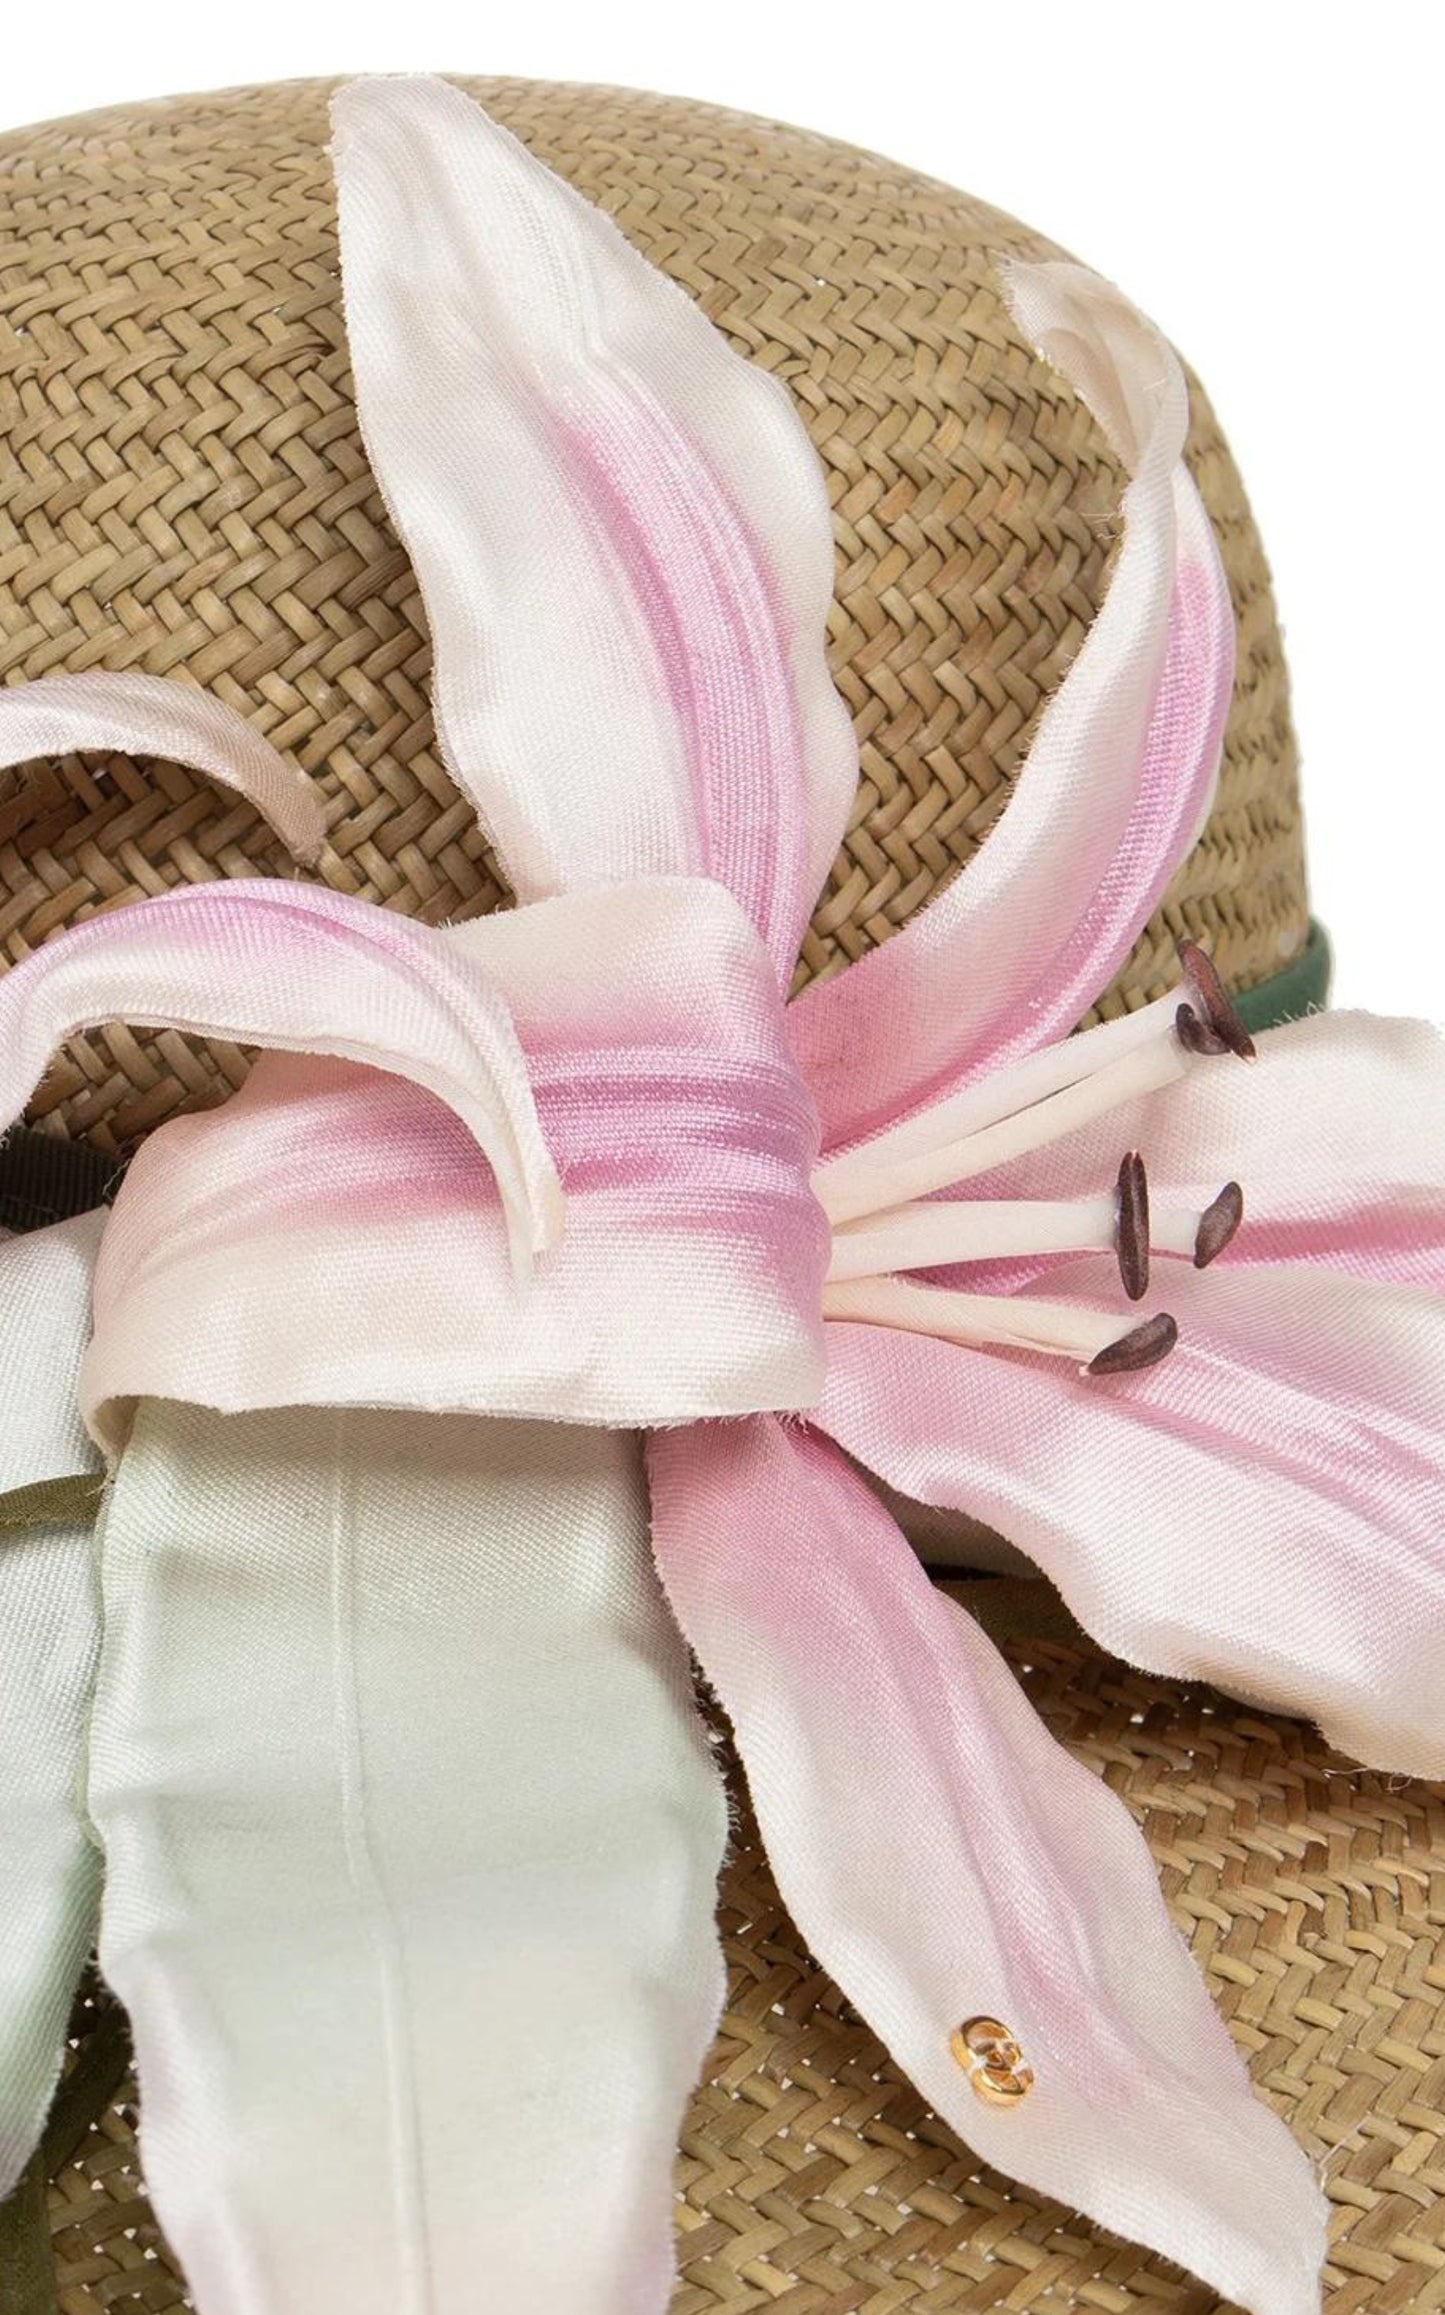 Sombrero de ala ancha con detalle floral